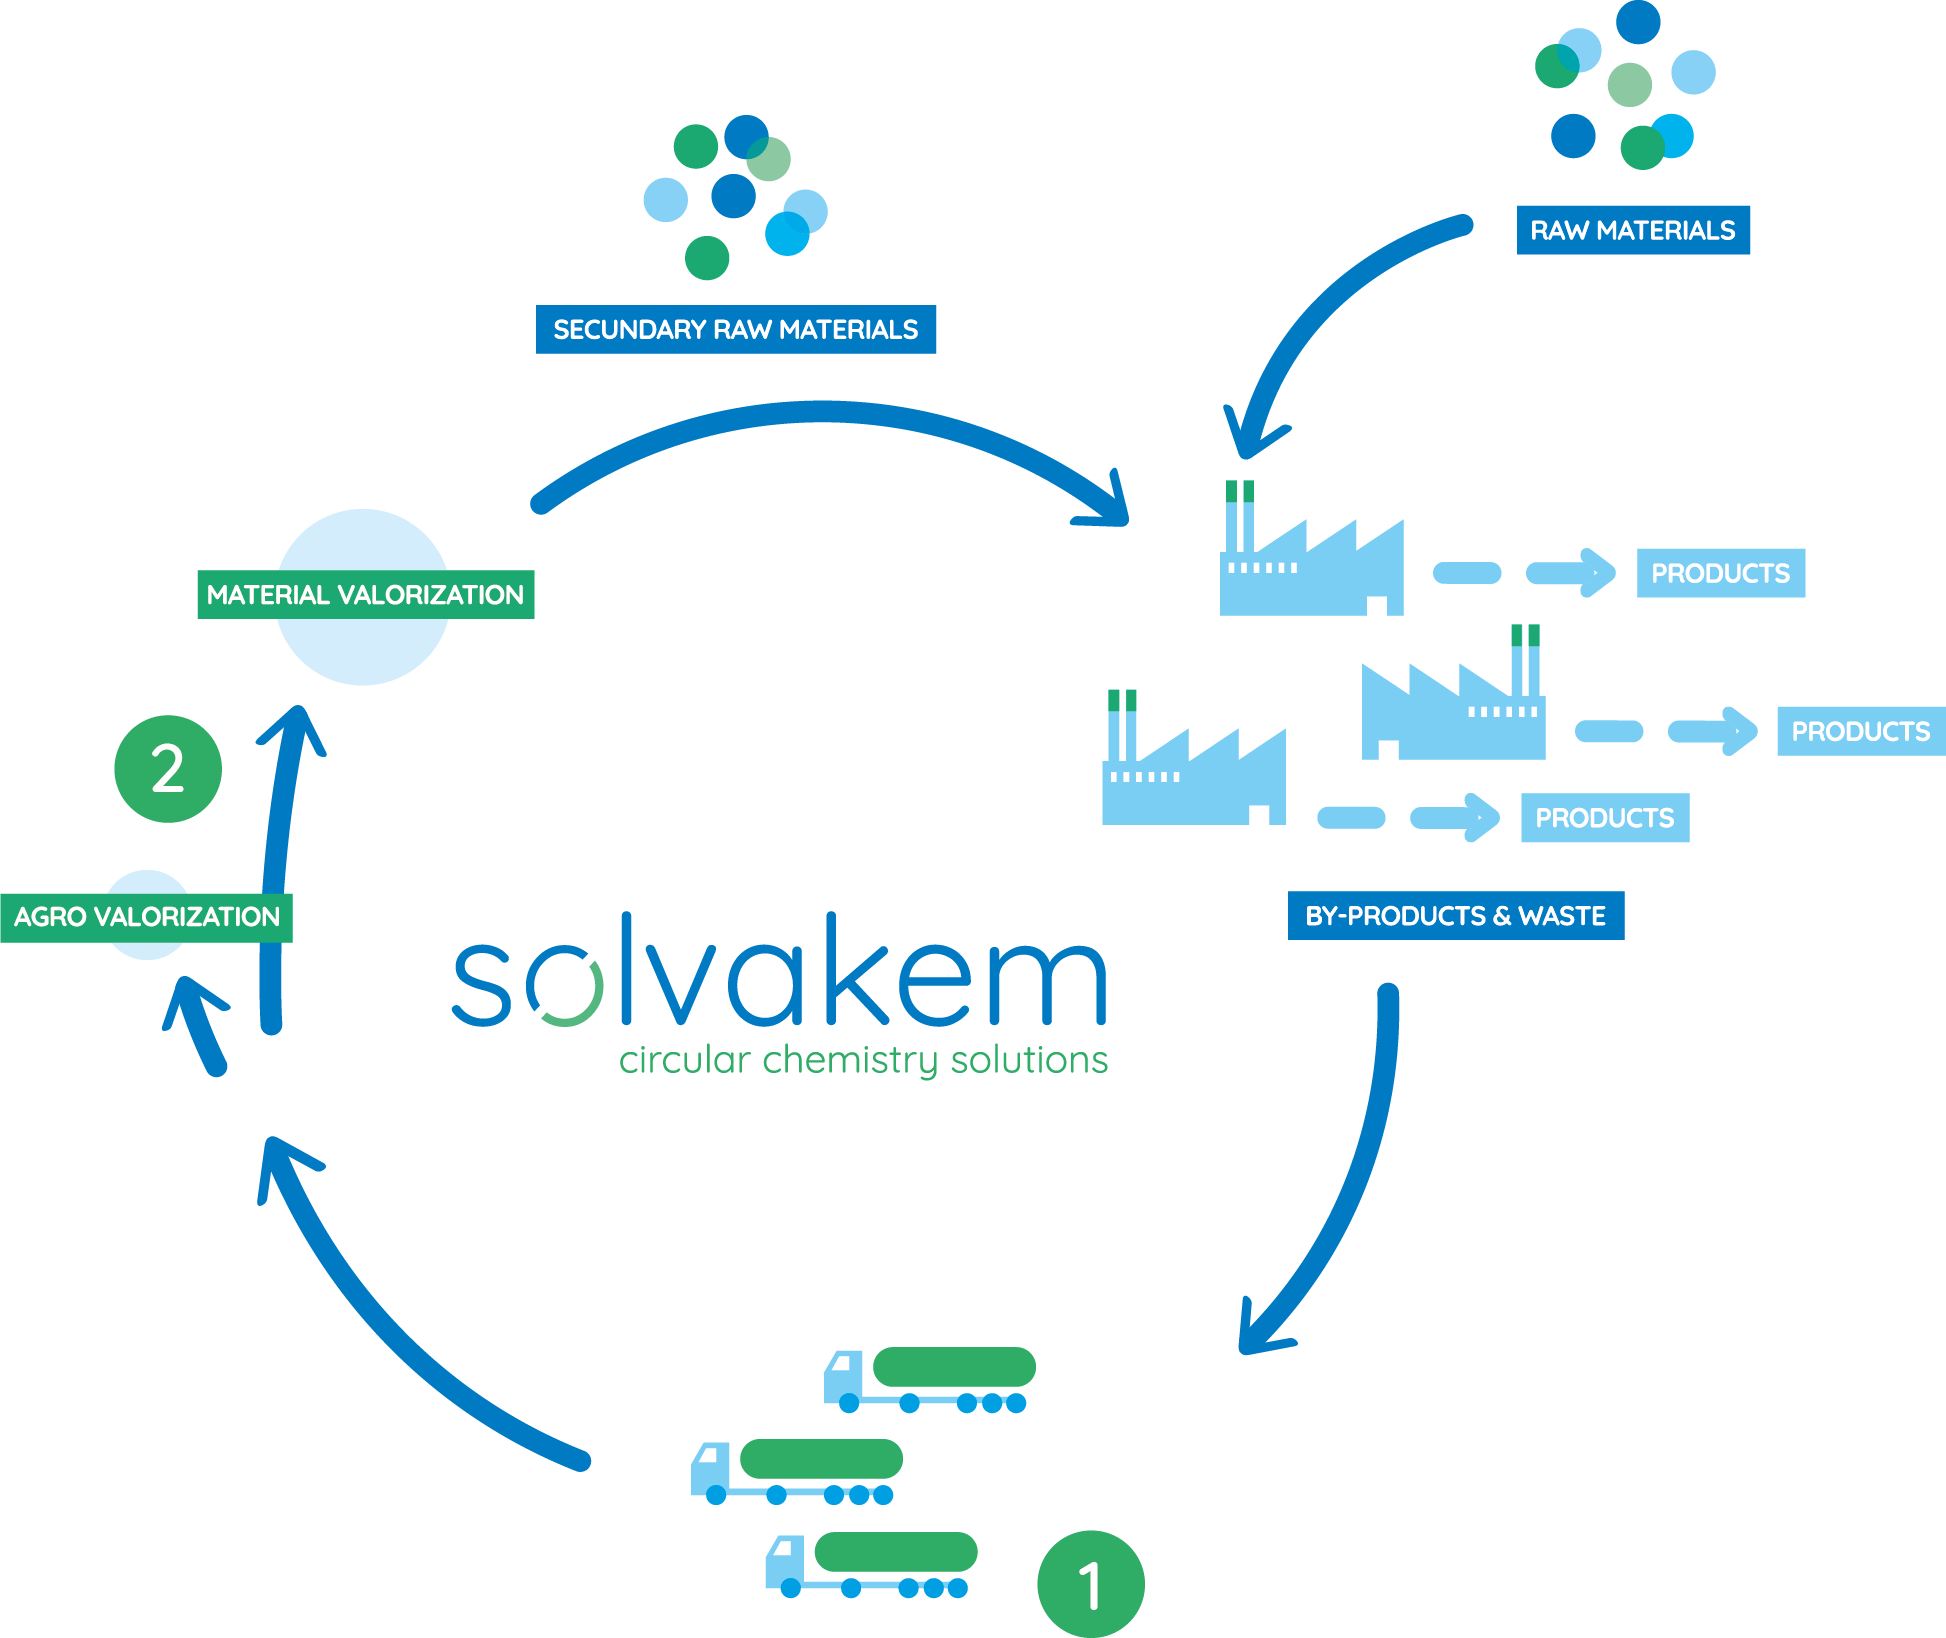 Gallery Solvakem Circular Chemistry Solutions 2